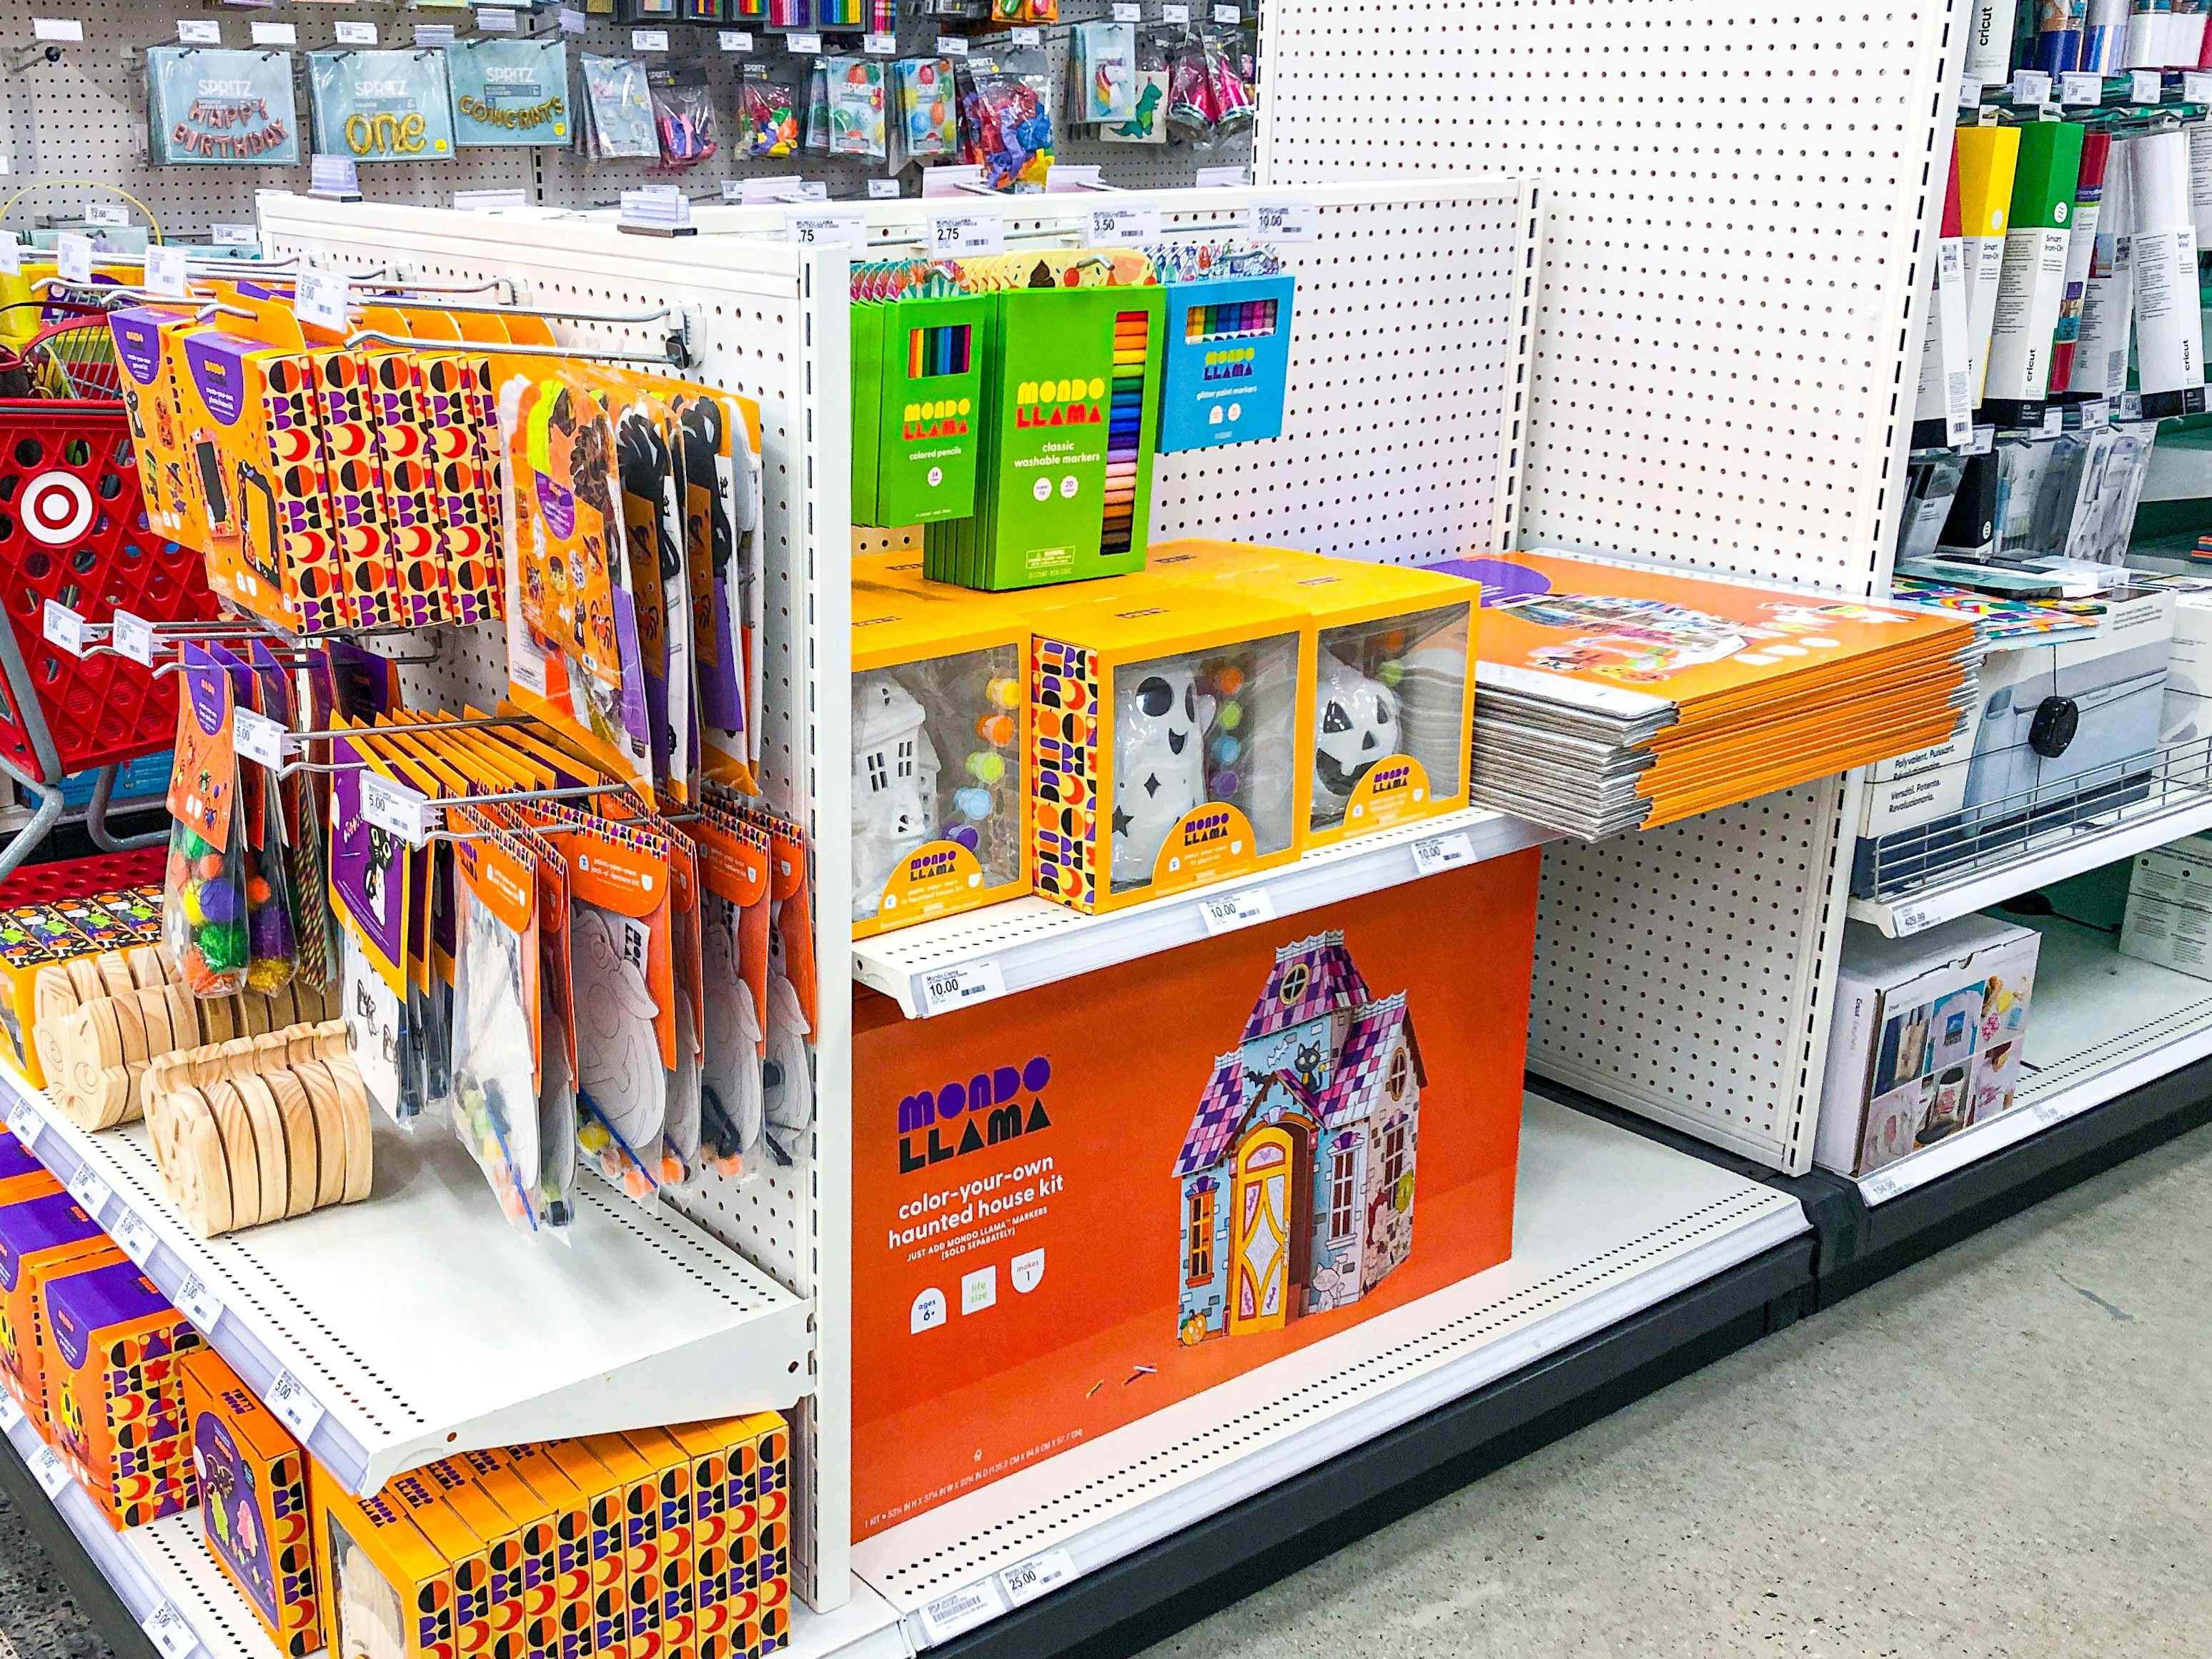 mondo llama halloween crafts on the shelf at Target